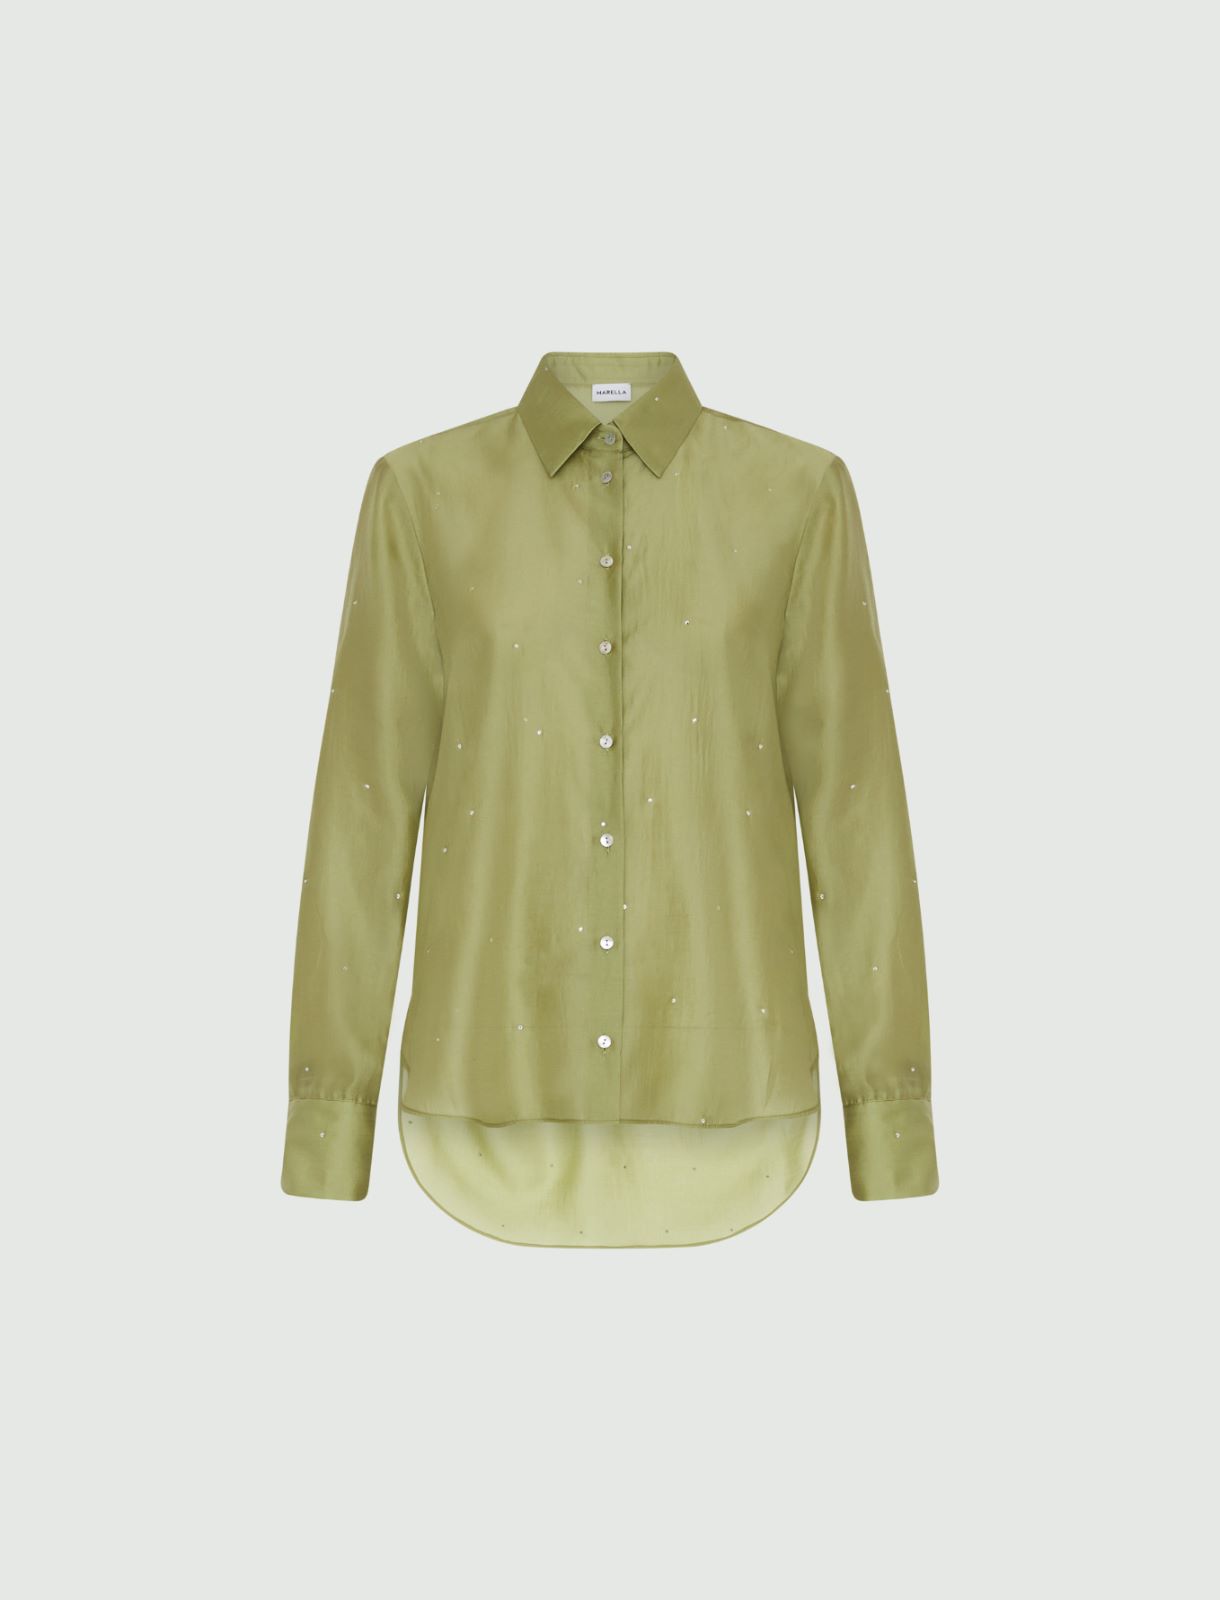 Rhinestone shirt - Avocado - Marella - 5